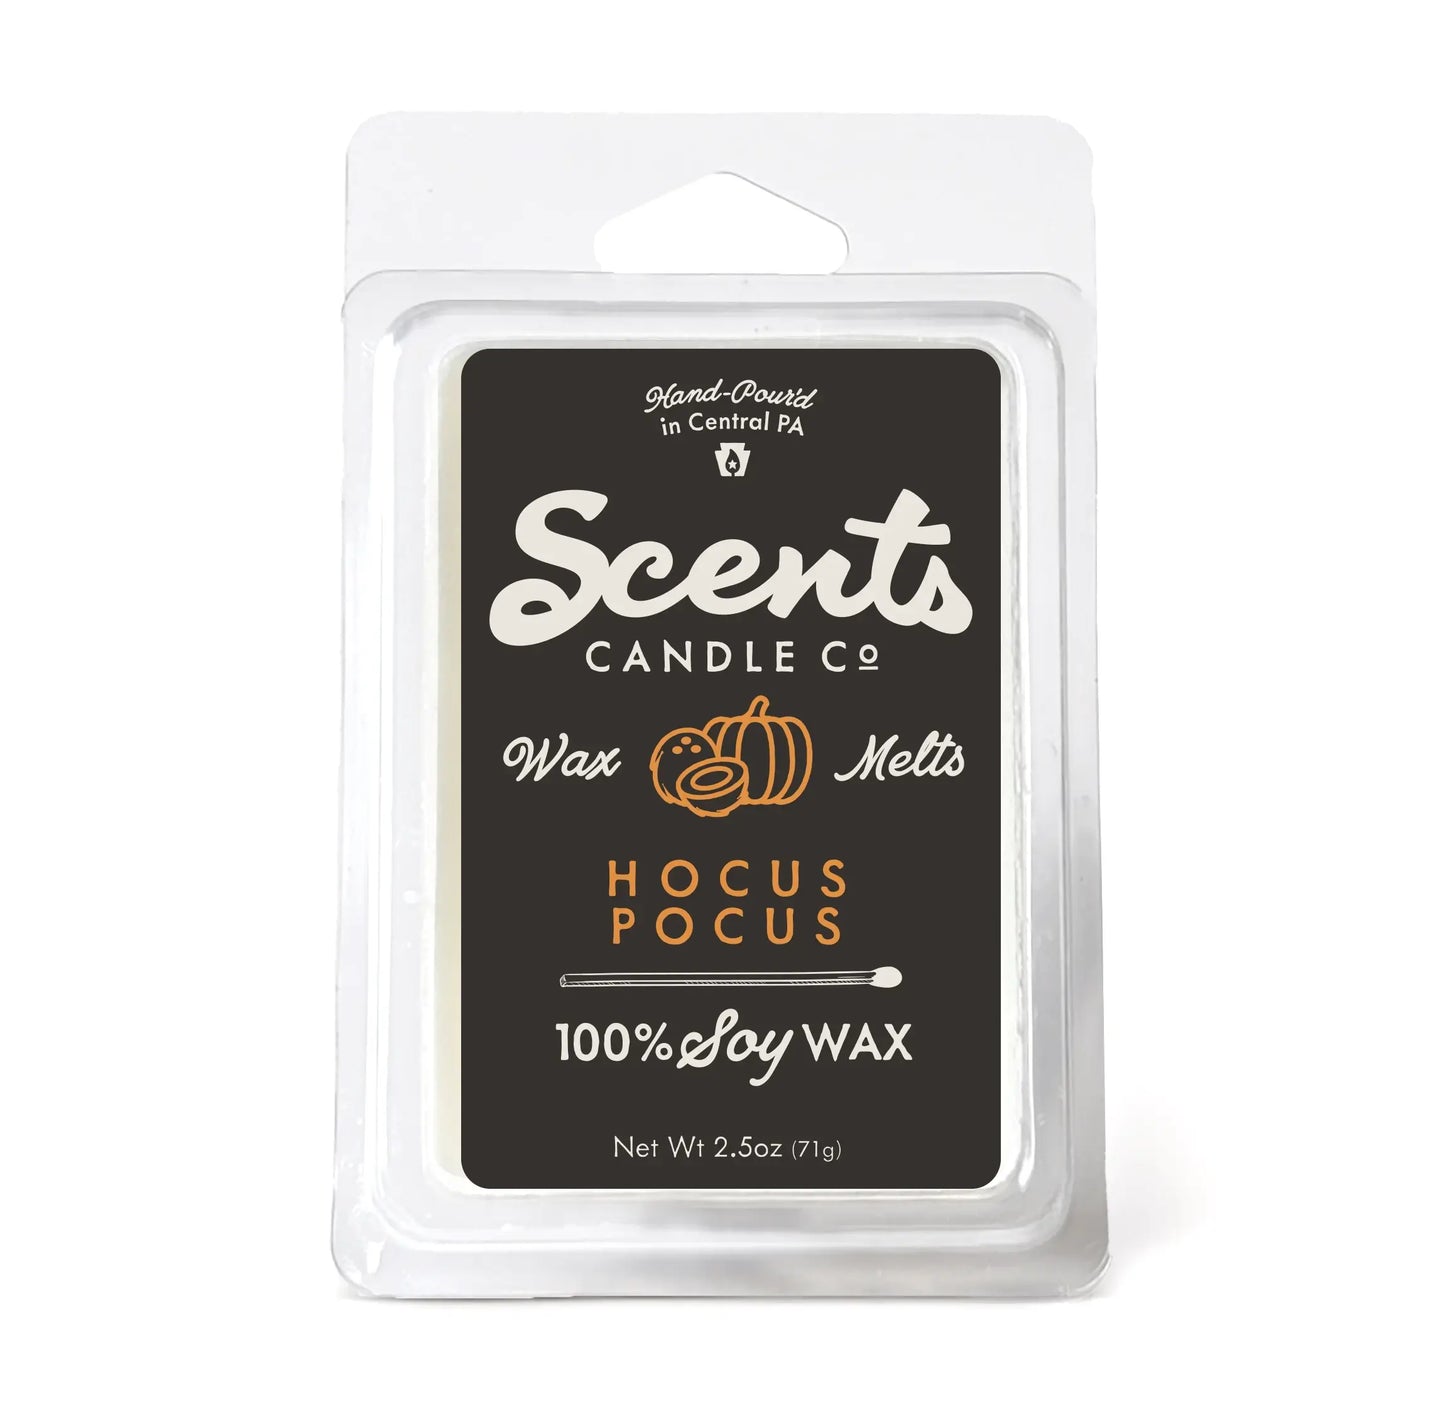 Scents Candle Co. Hocus Pocus Wax Melt